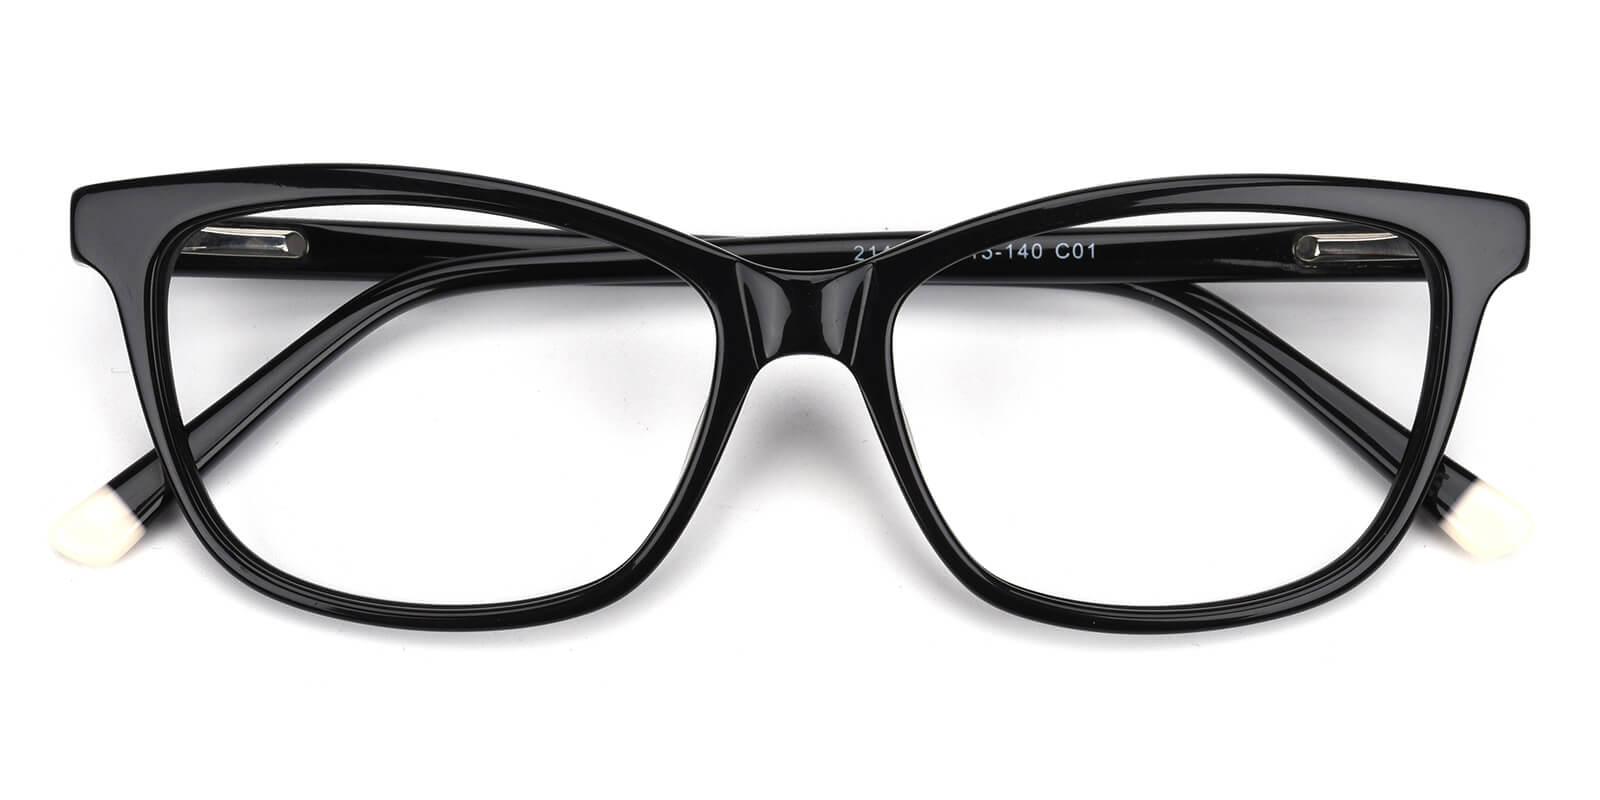 Clowdia-Black-Square / Cat-Acetate-Eyeglasses-detail